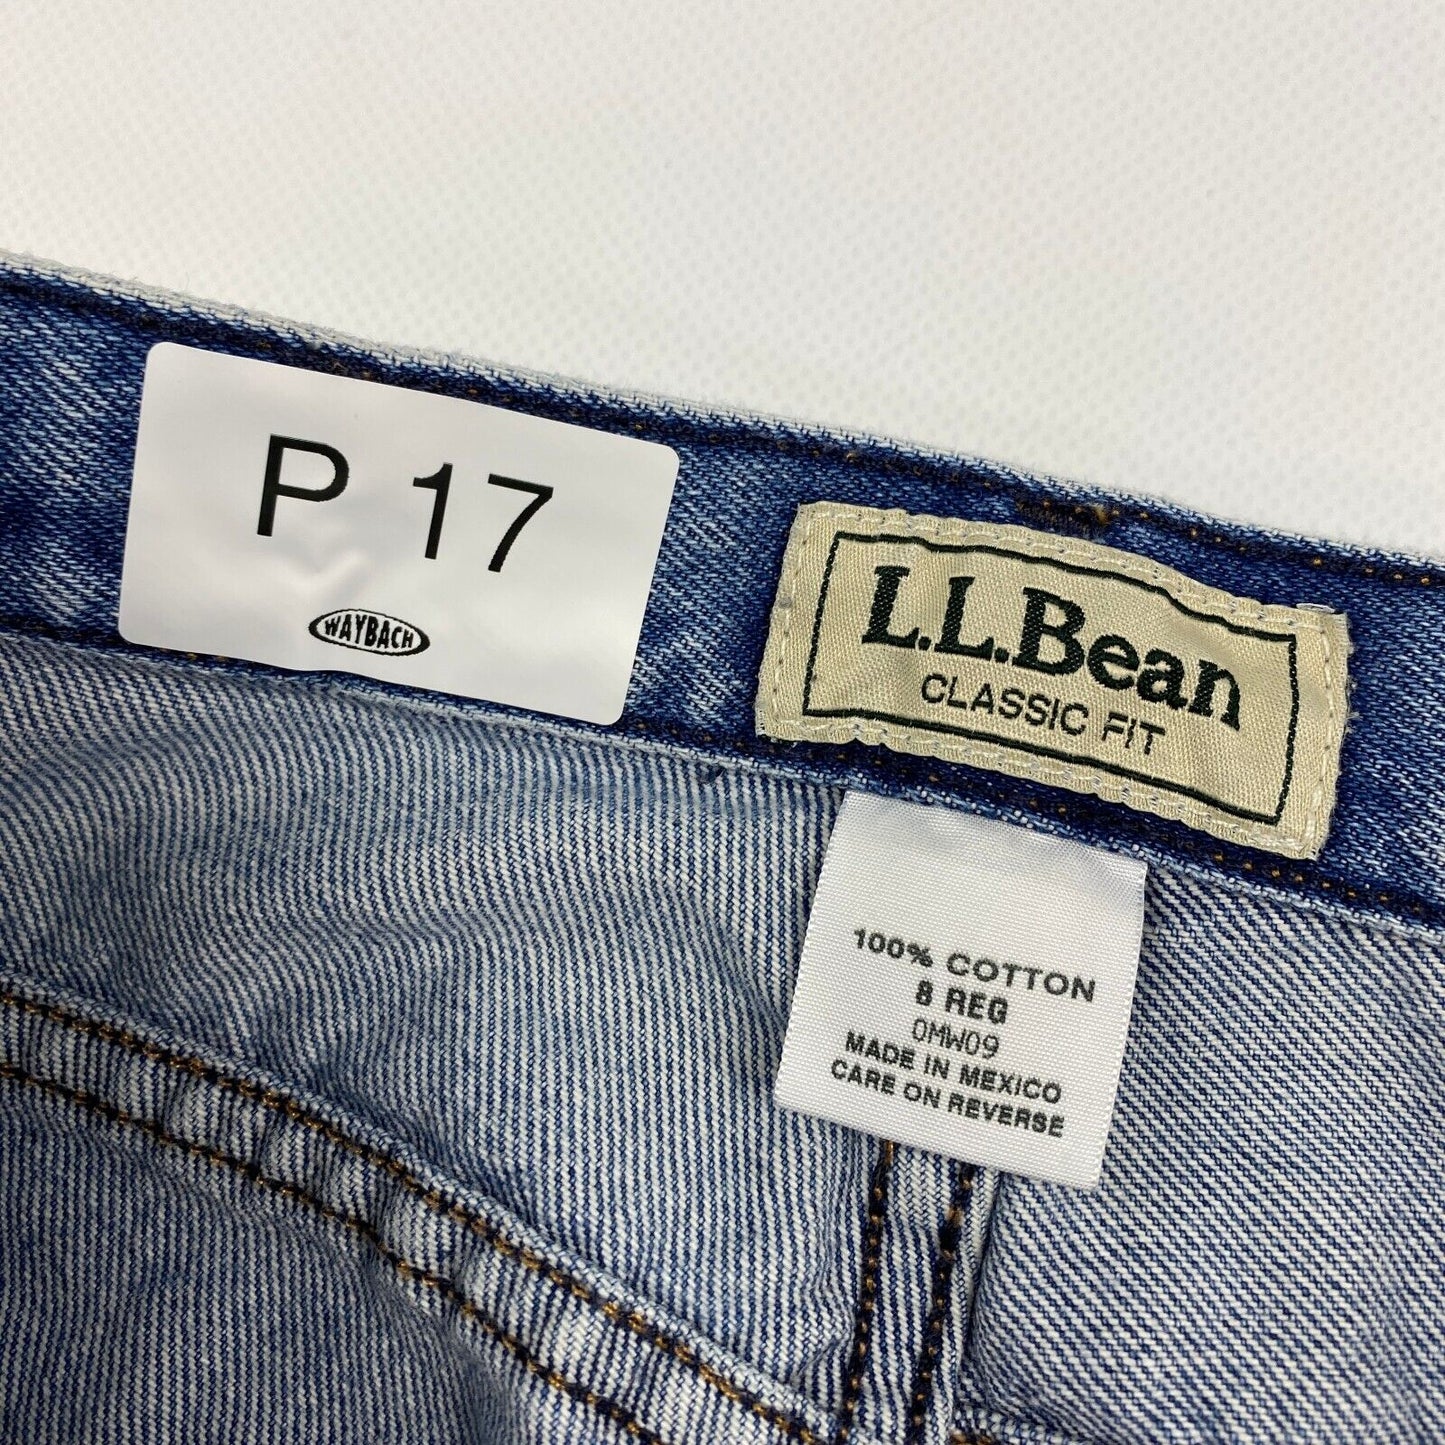 VINTAGE L.L Bean Classic Fit Denim Jean Pants sz W28 L29 / 8 Reg Adult